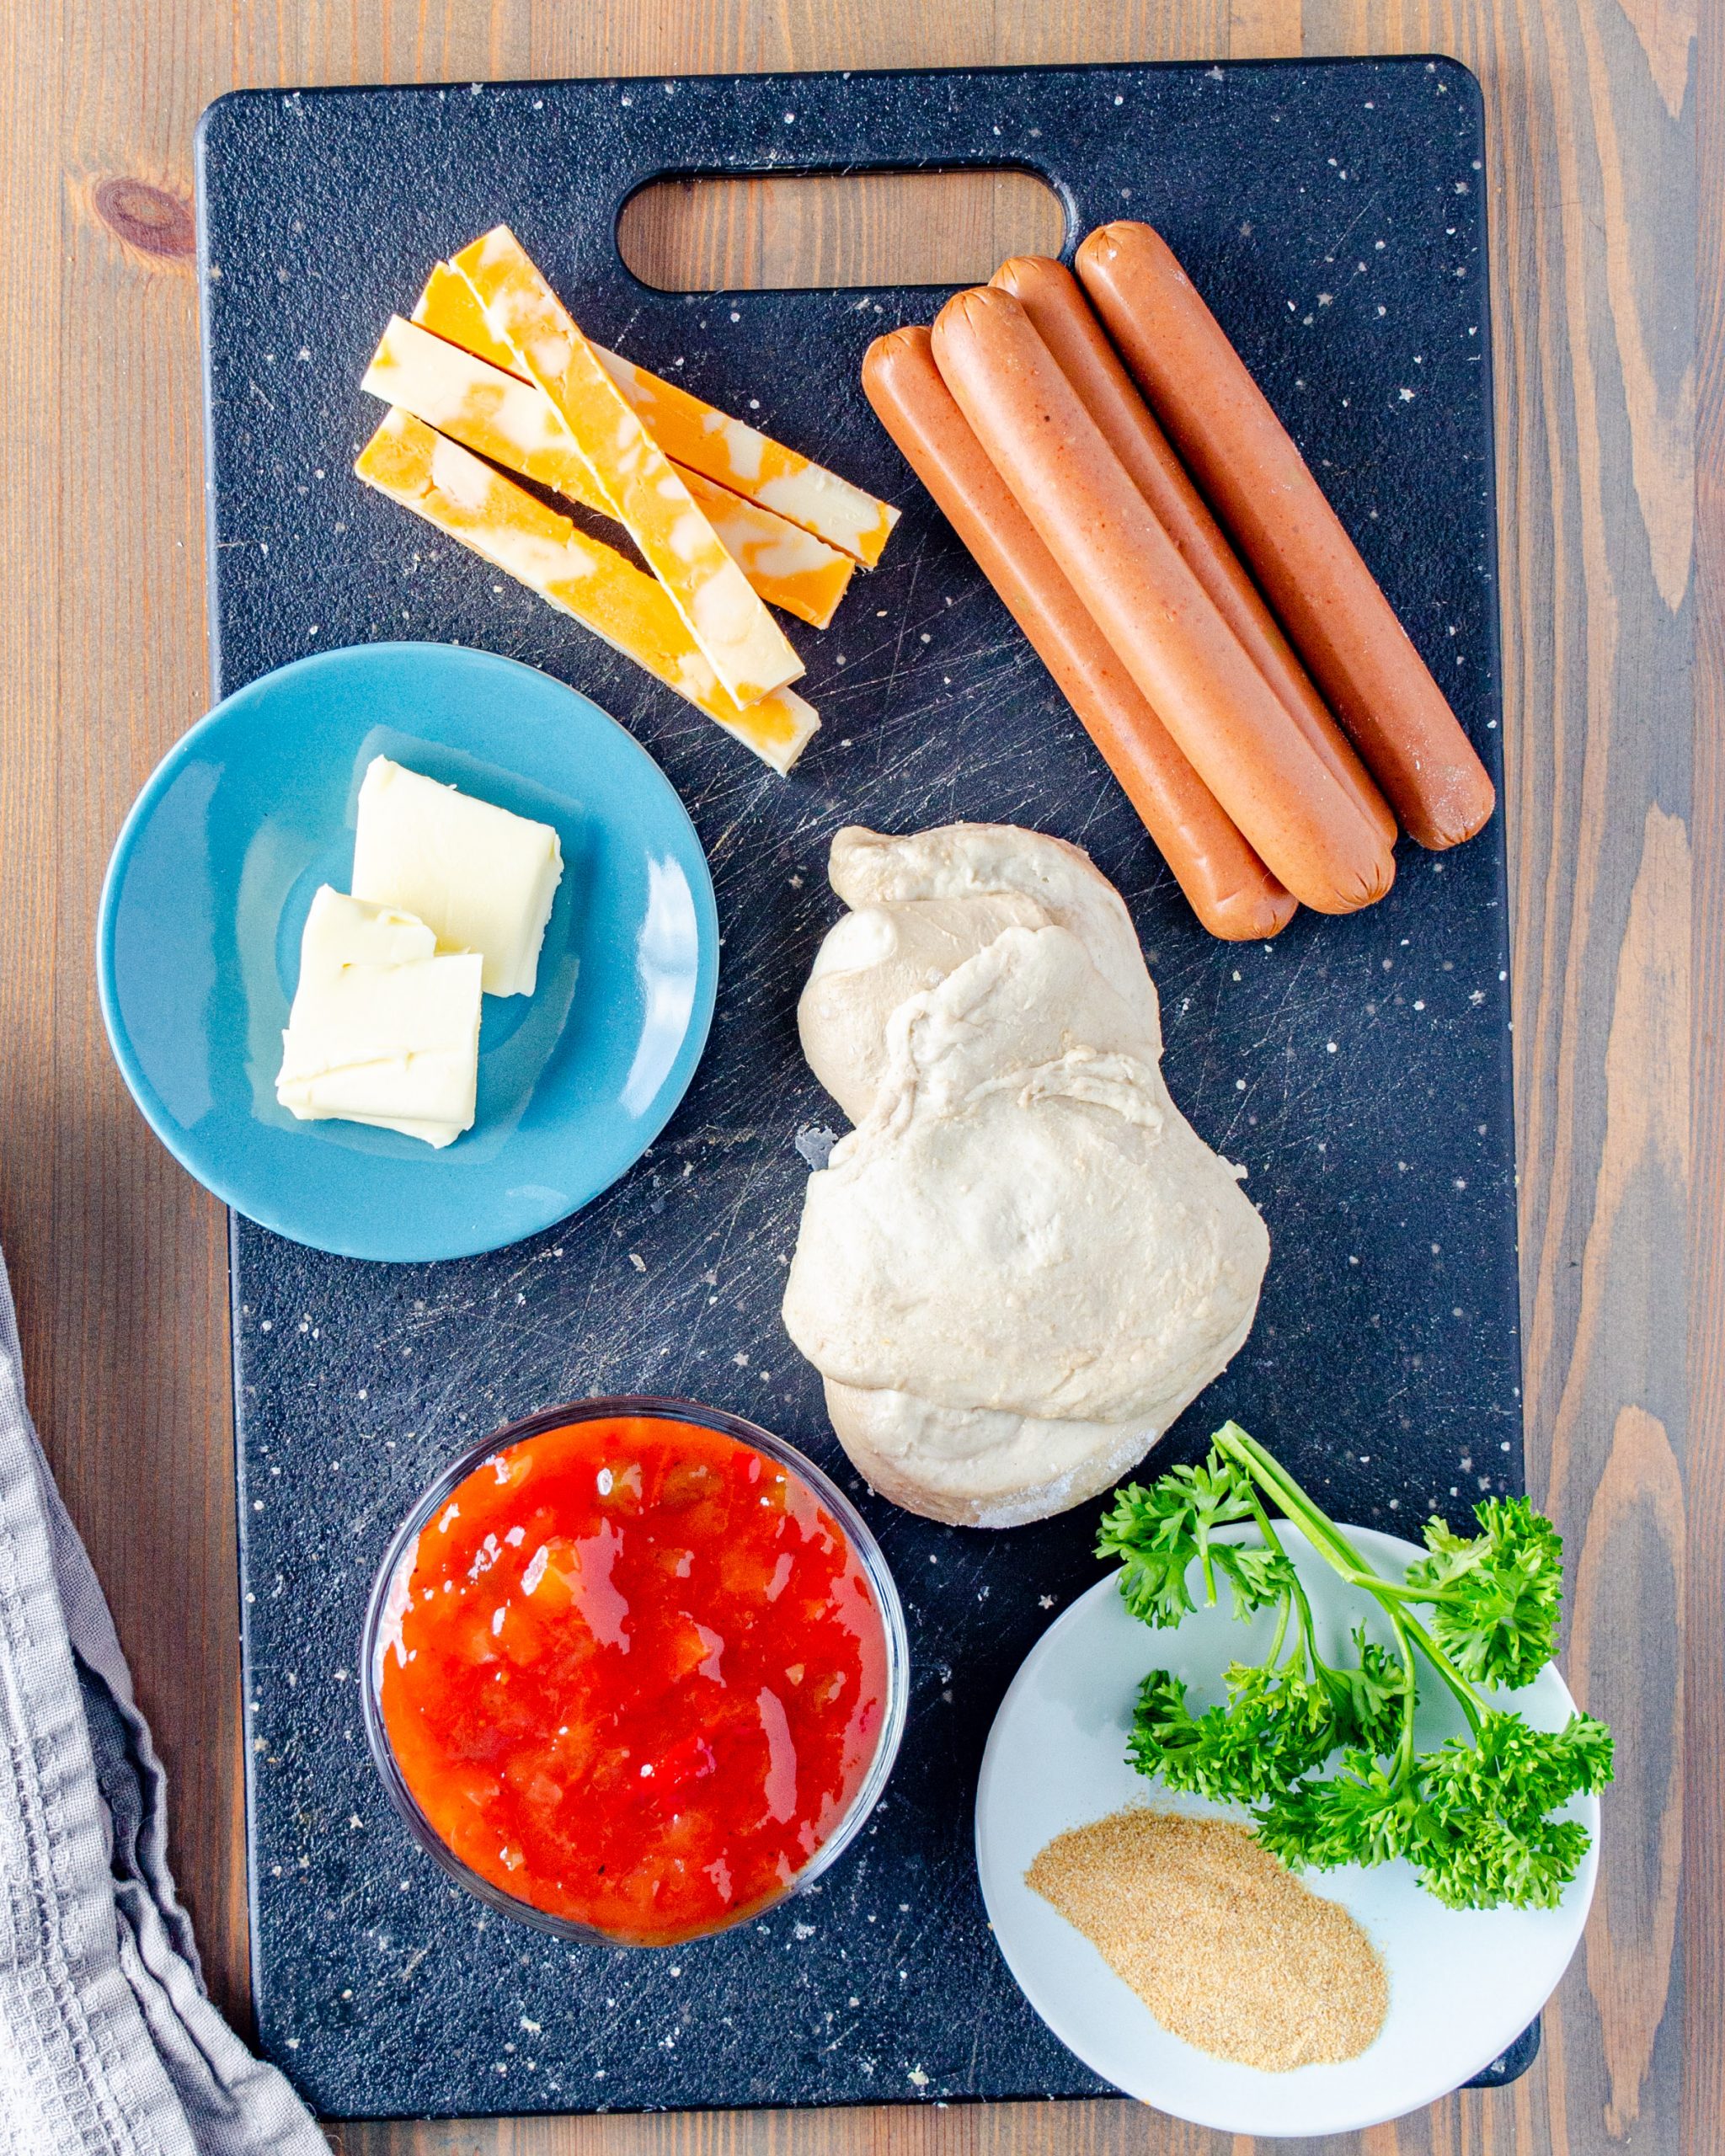 Chili Cheese Dog Bake Dinner ingredients